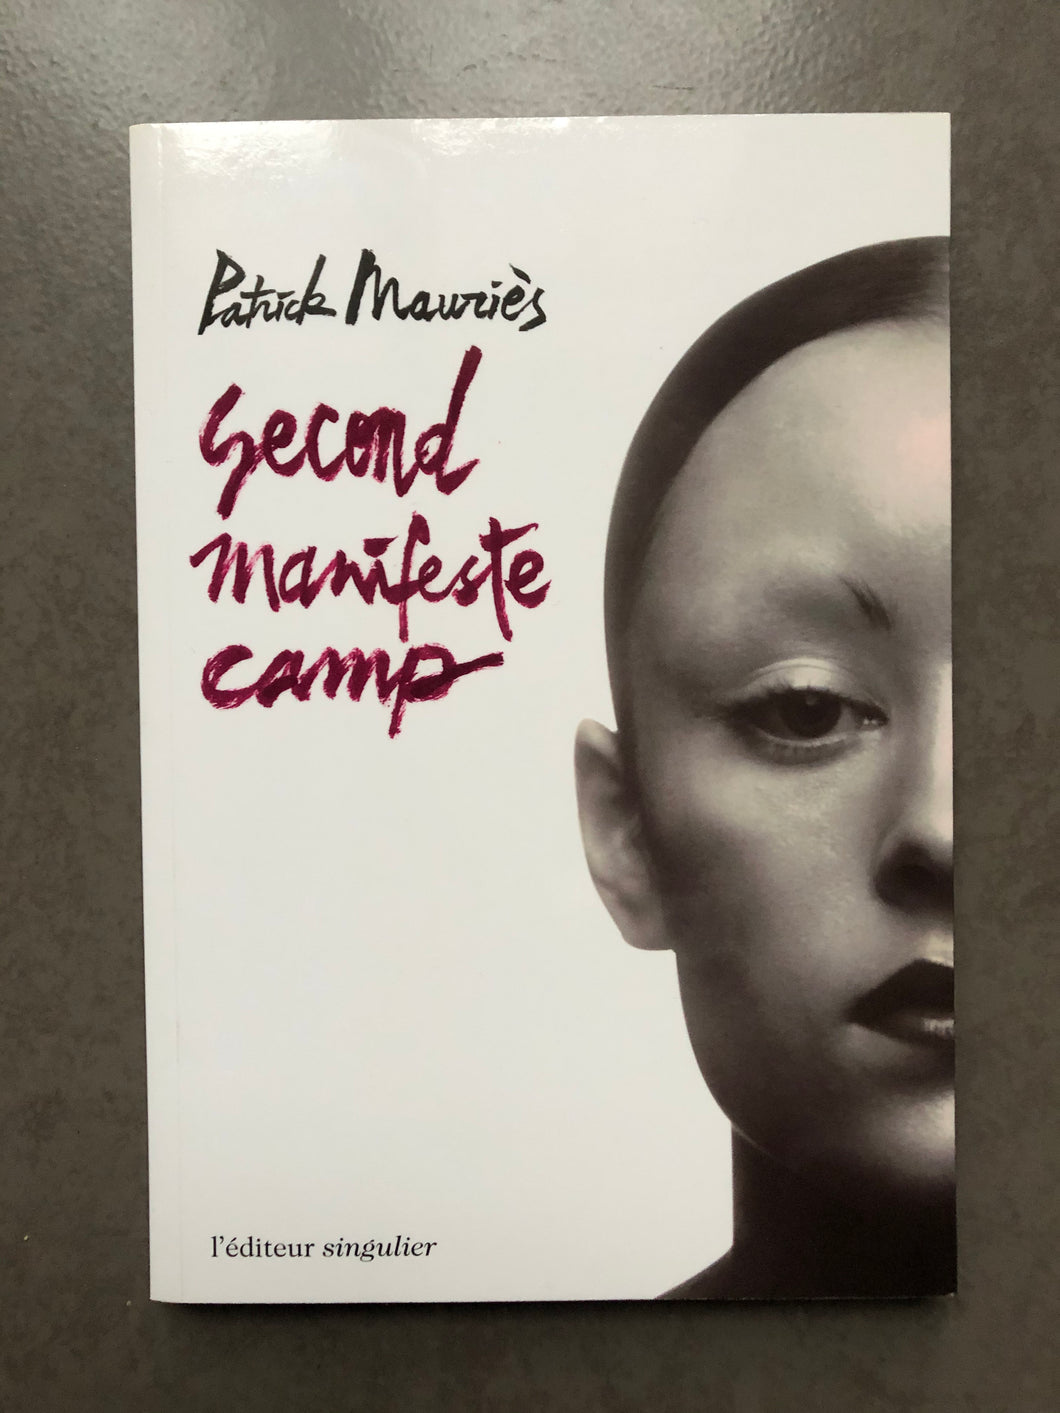 Second manifeste camp - Patrick Mauriès